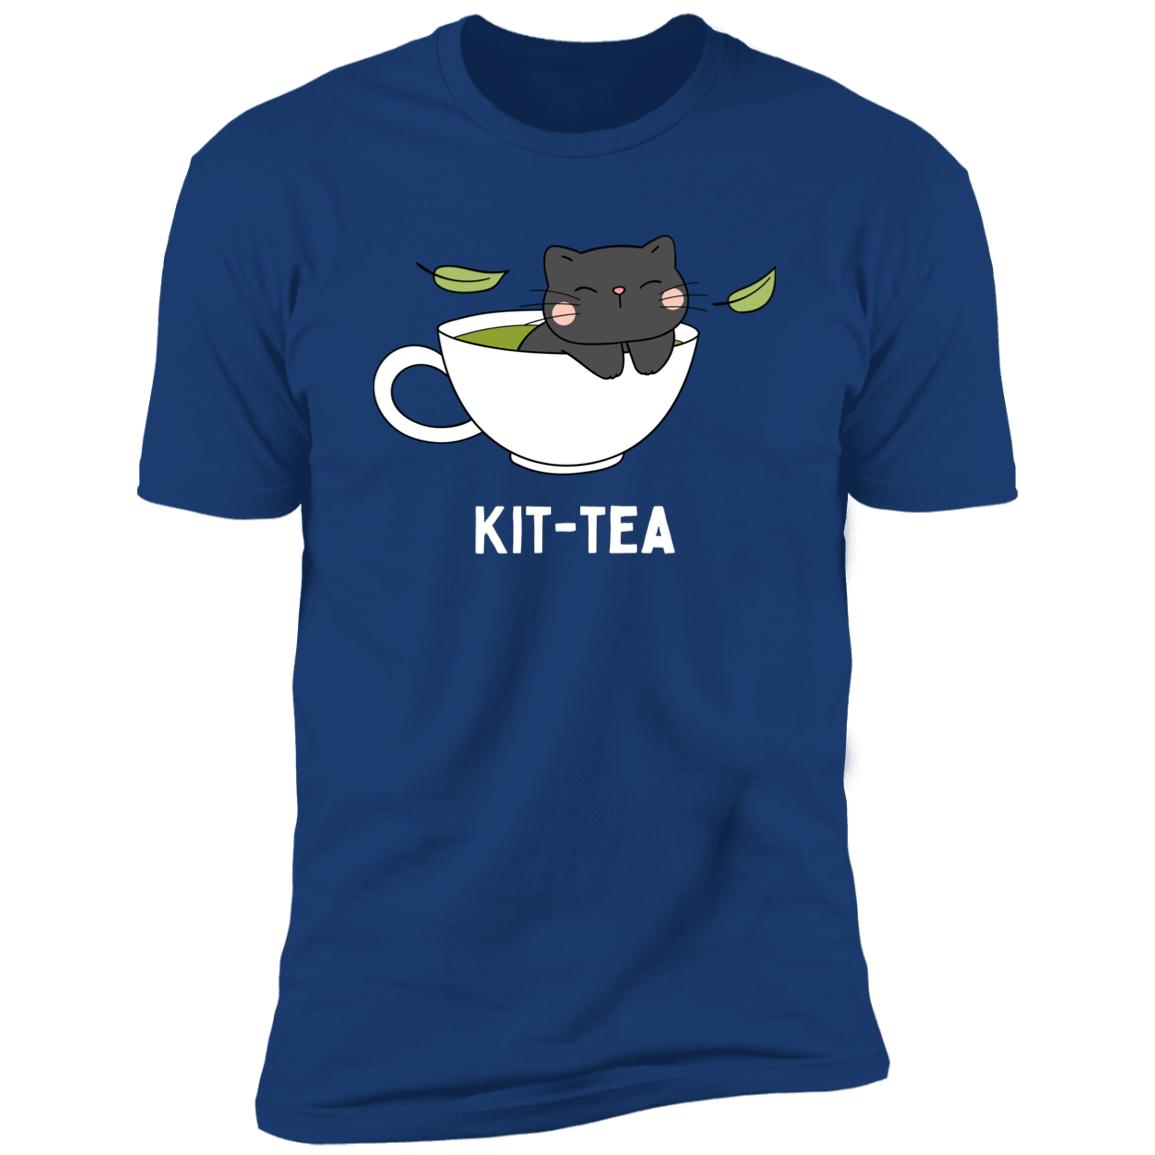 Kitt-Tea T-Shirt, kitty tea shirt, Cat Shirt for humans, funny cat shirt, in royal blue